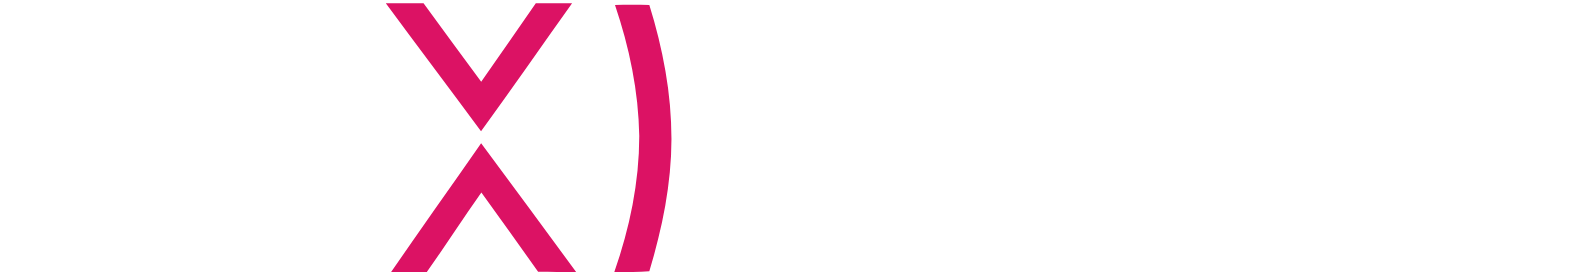 LexinFintech Holdings
 logo large for dark backgrounds (transparent PNG)